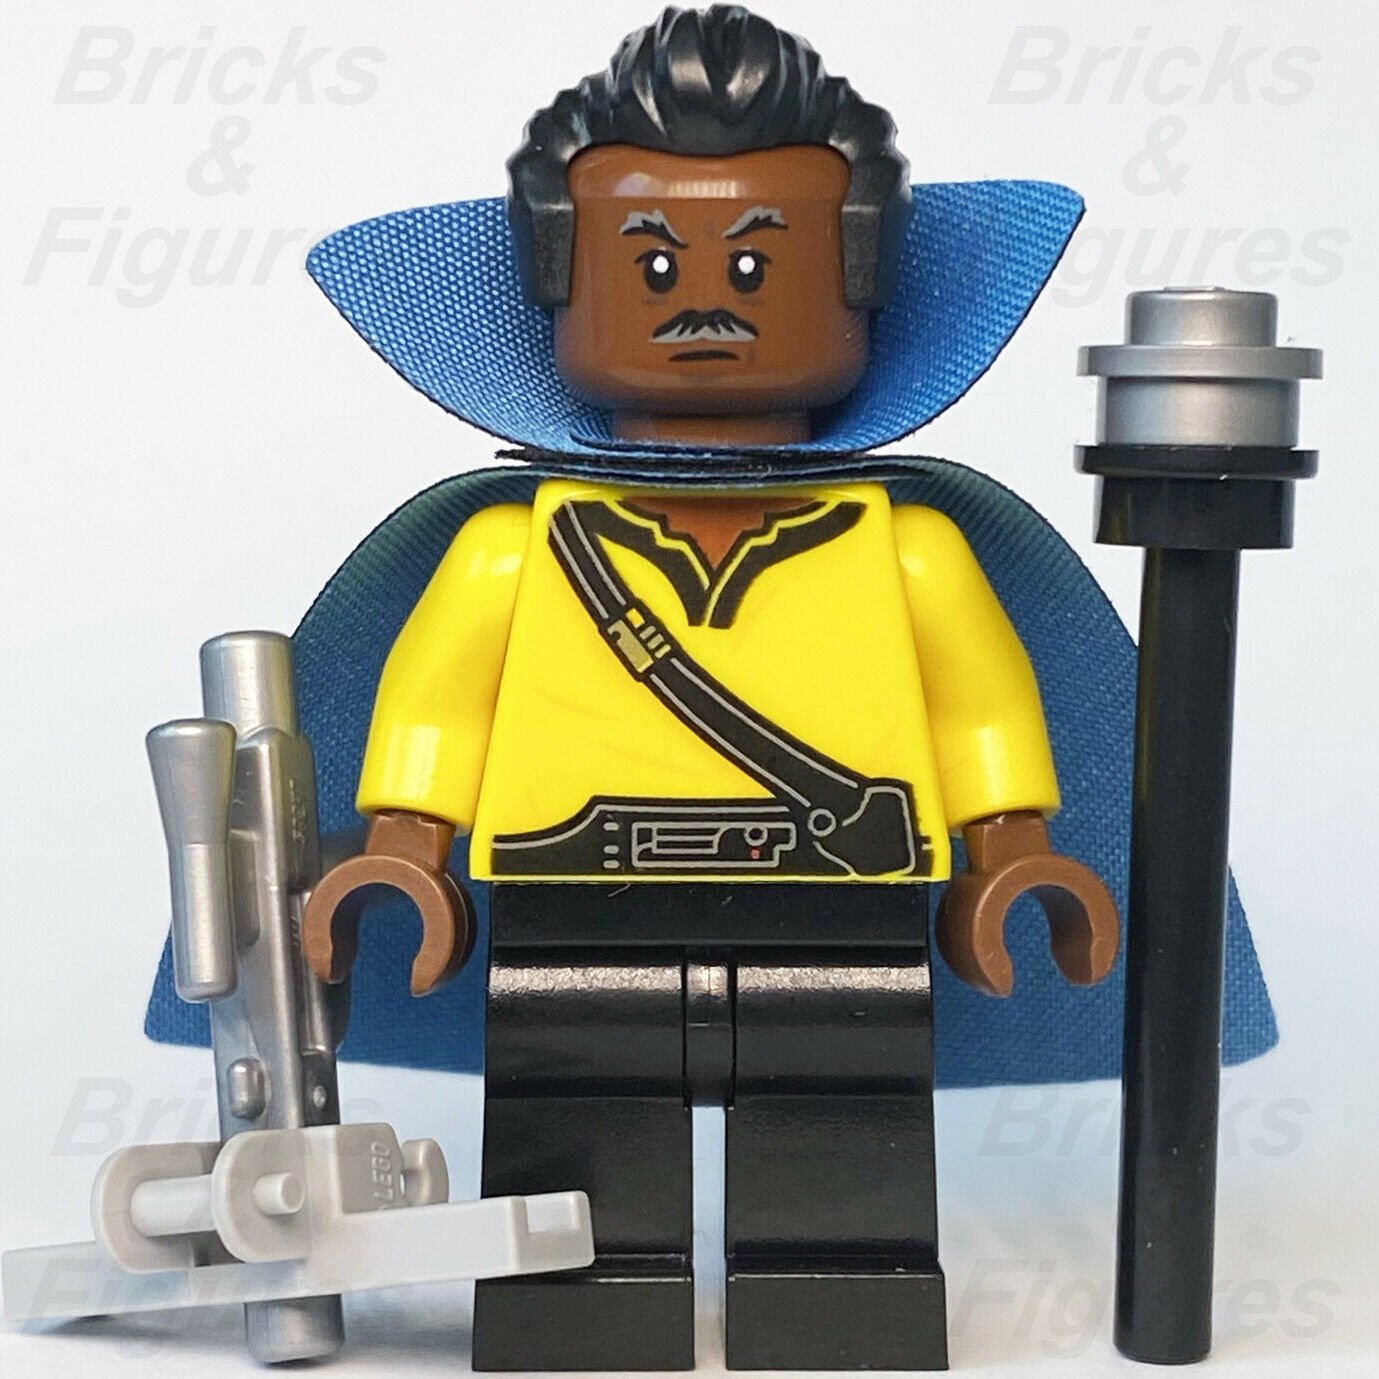 New Star Wars LEGO Old Lando Calrissian The Rise of Skywalker Minifigure 75257 - Bricks & Figures